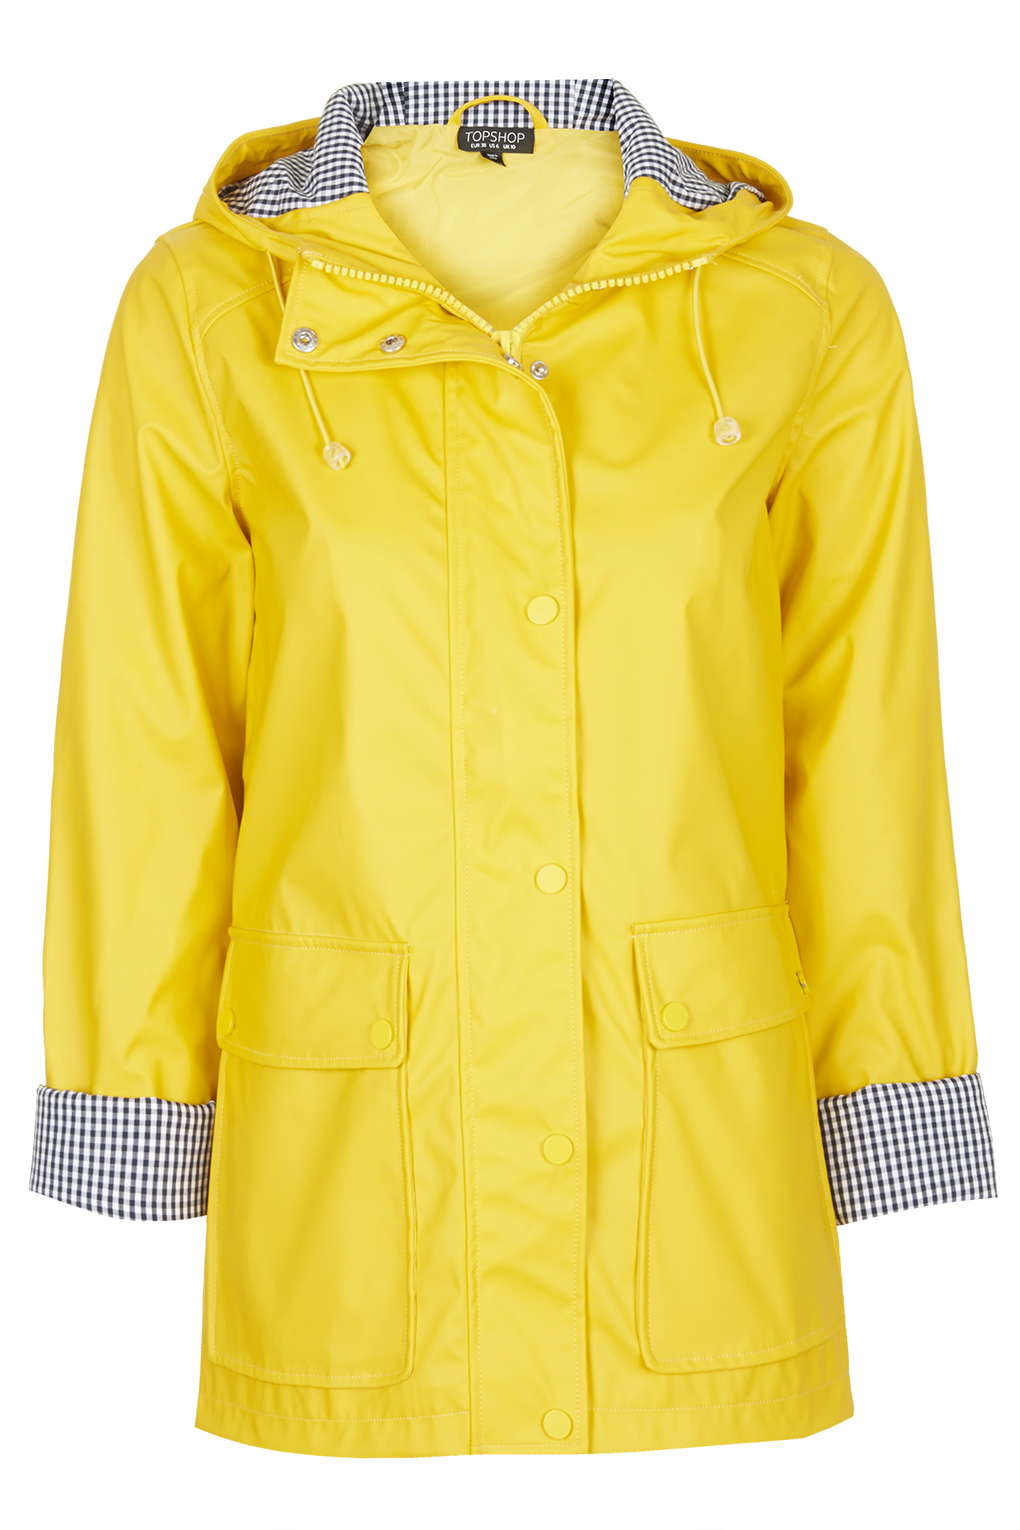 The Classic Yellow Rain Coat Trend | Raindrops of Sapphire